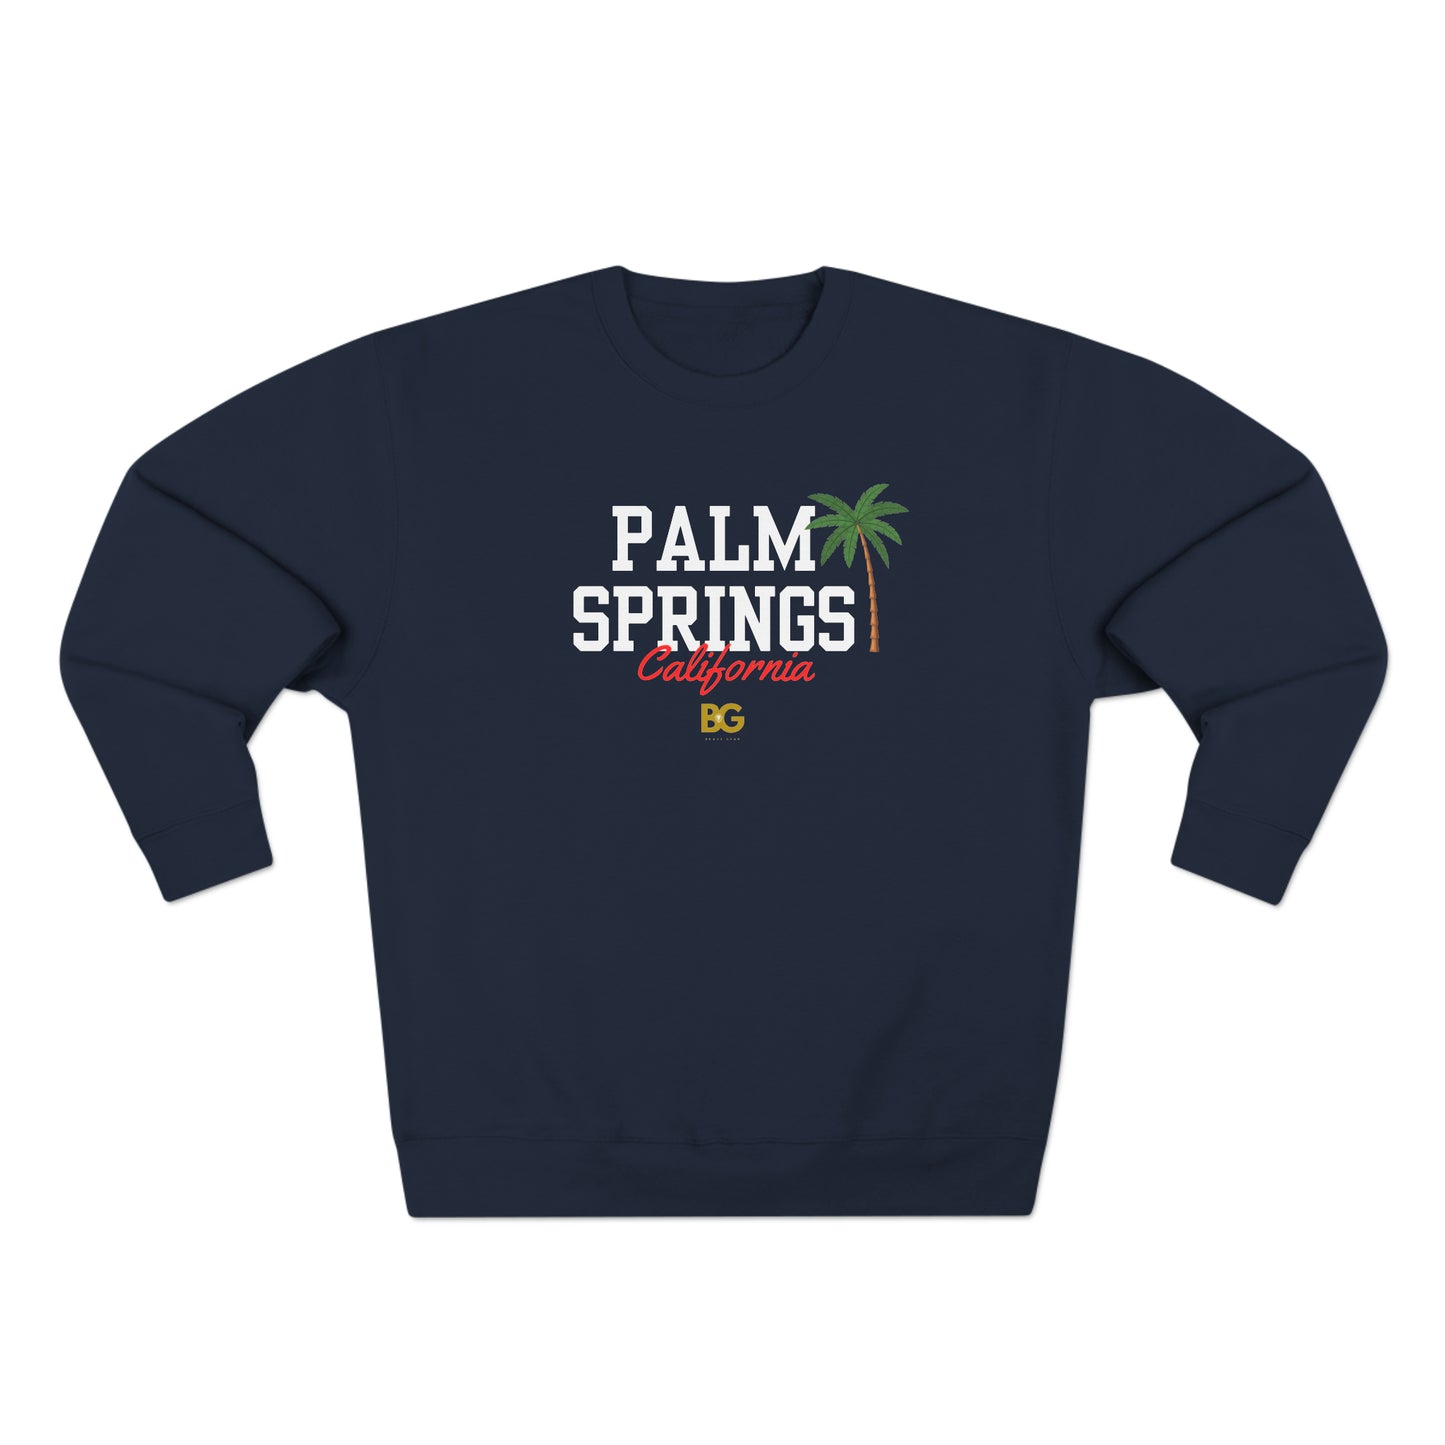 BG "Palm Springs California" Premium Crewneck Sweatshirt